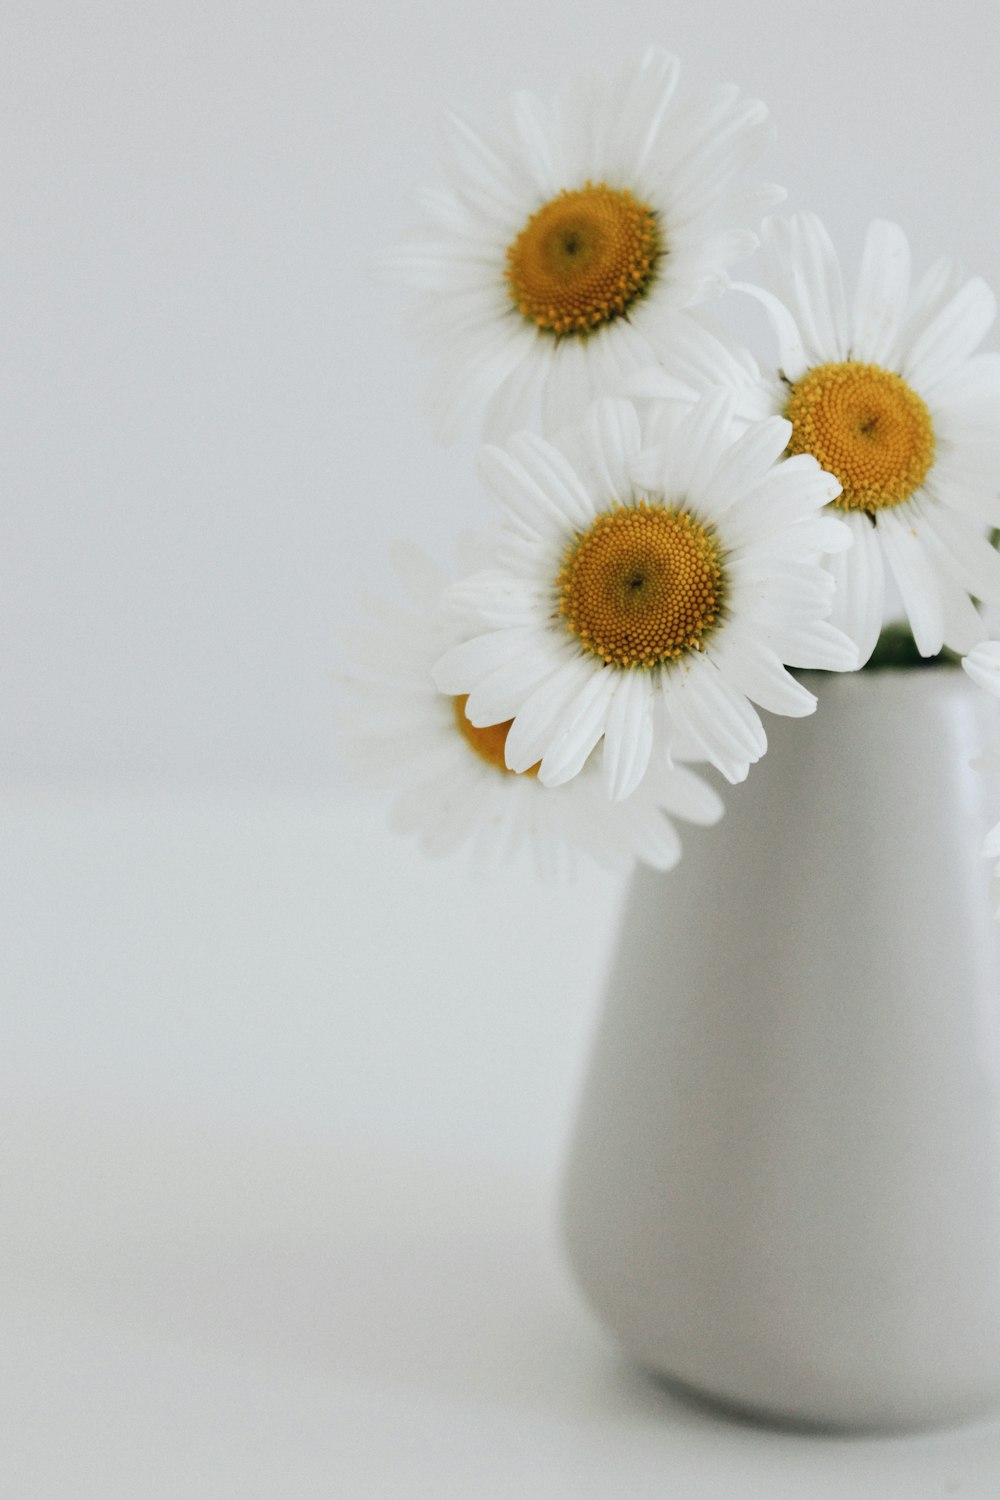 white and yellow daisy flowers in white ceramic vase